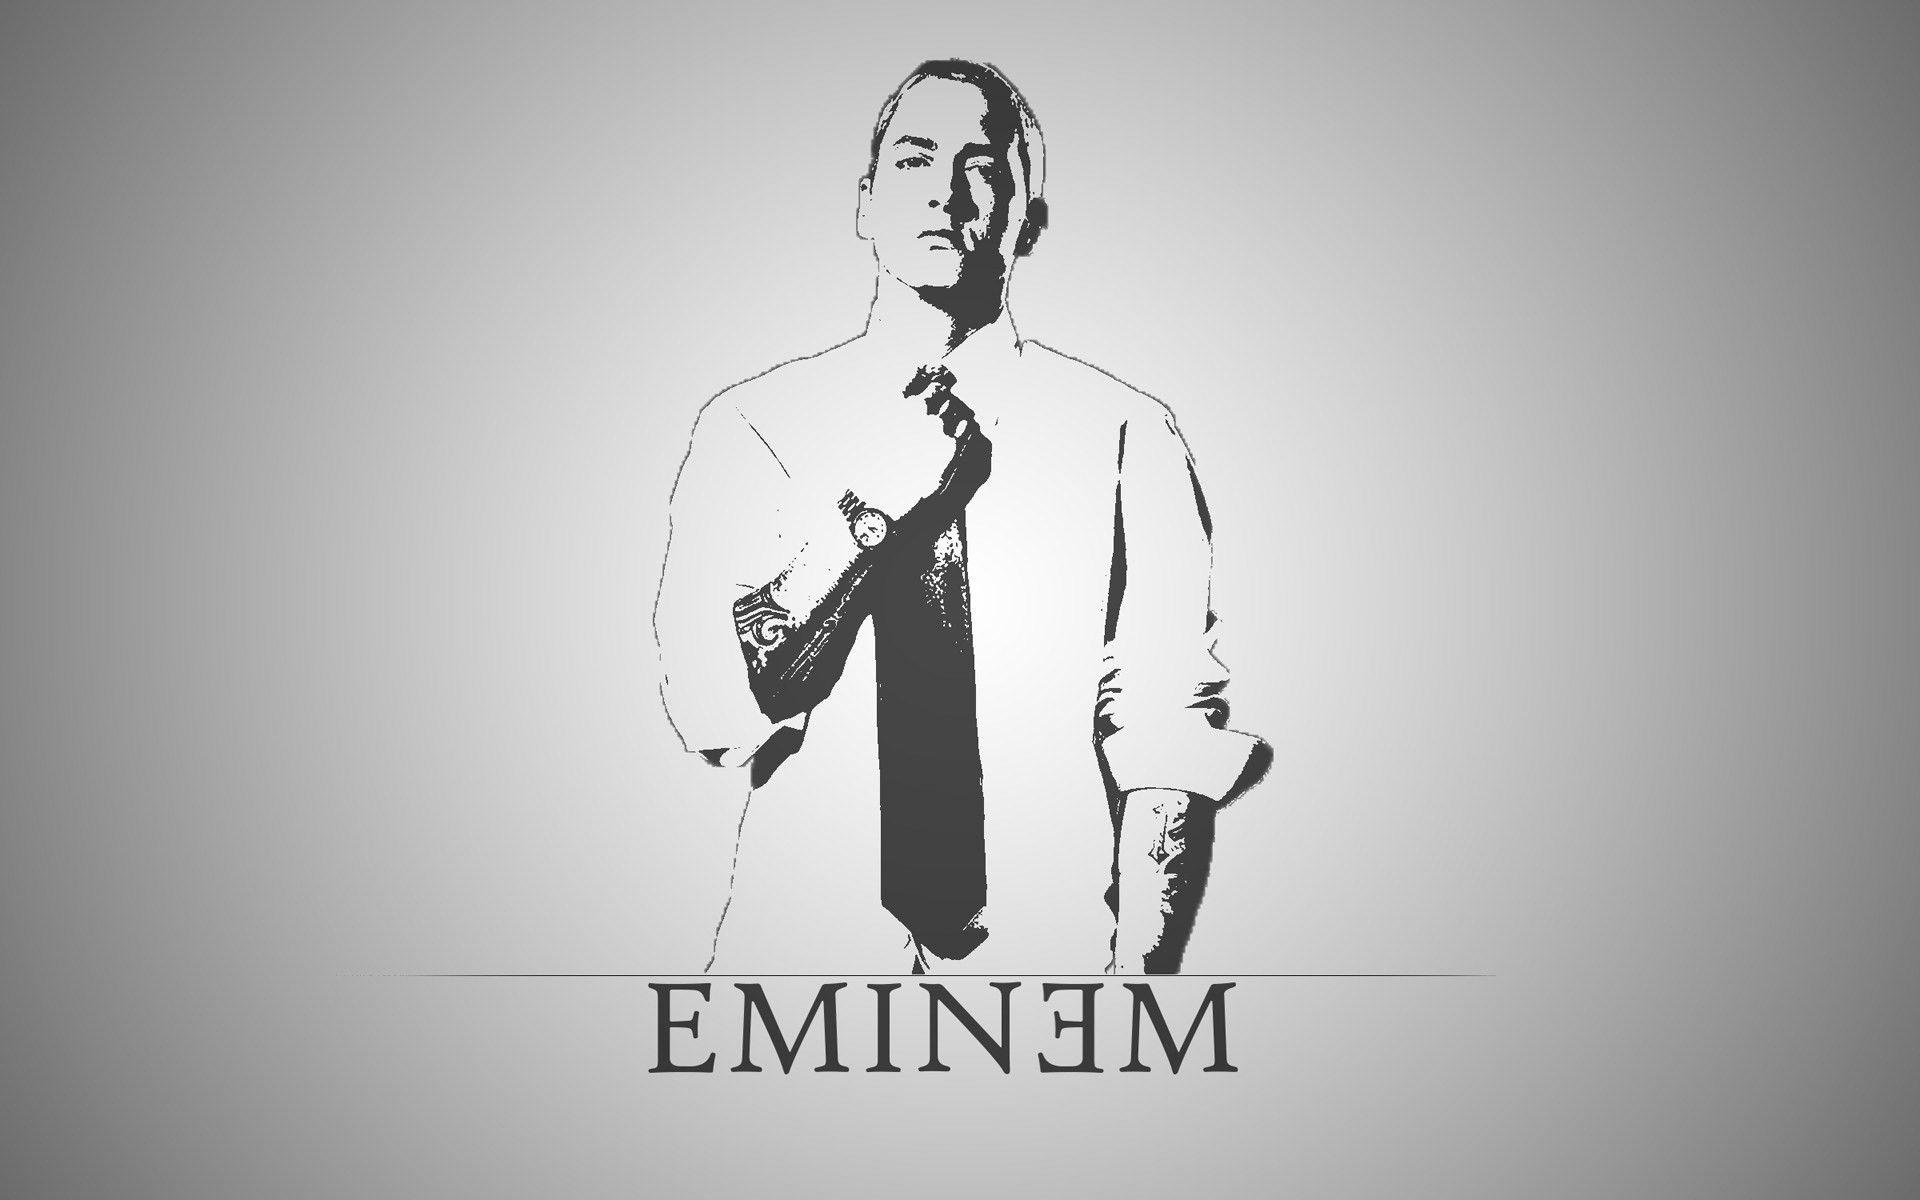 HD Eminem Wallpaper For Desktop. Foolhardi